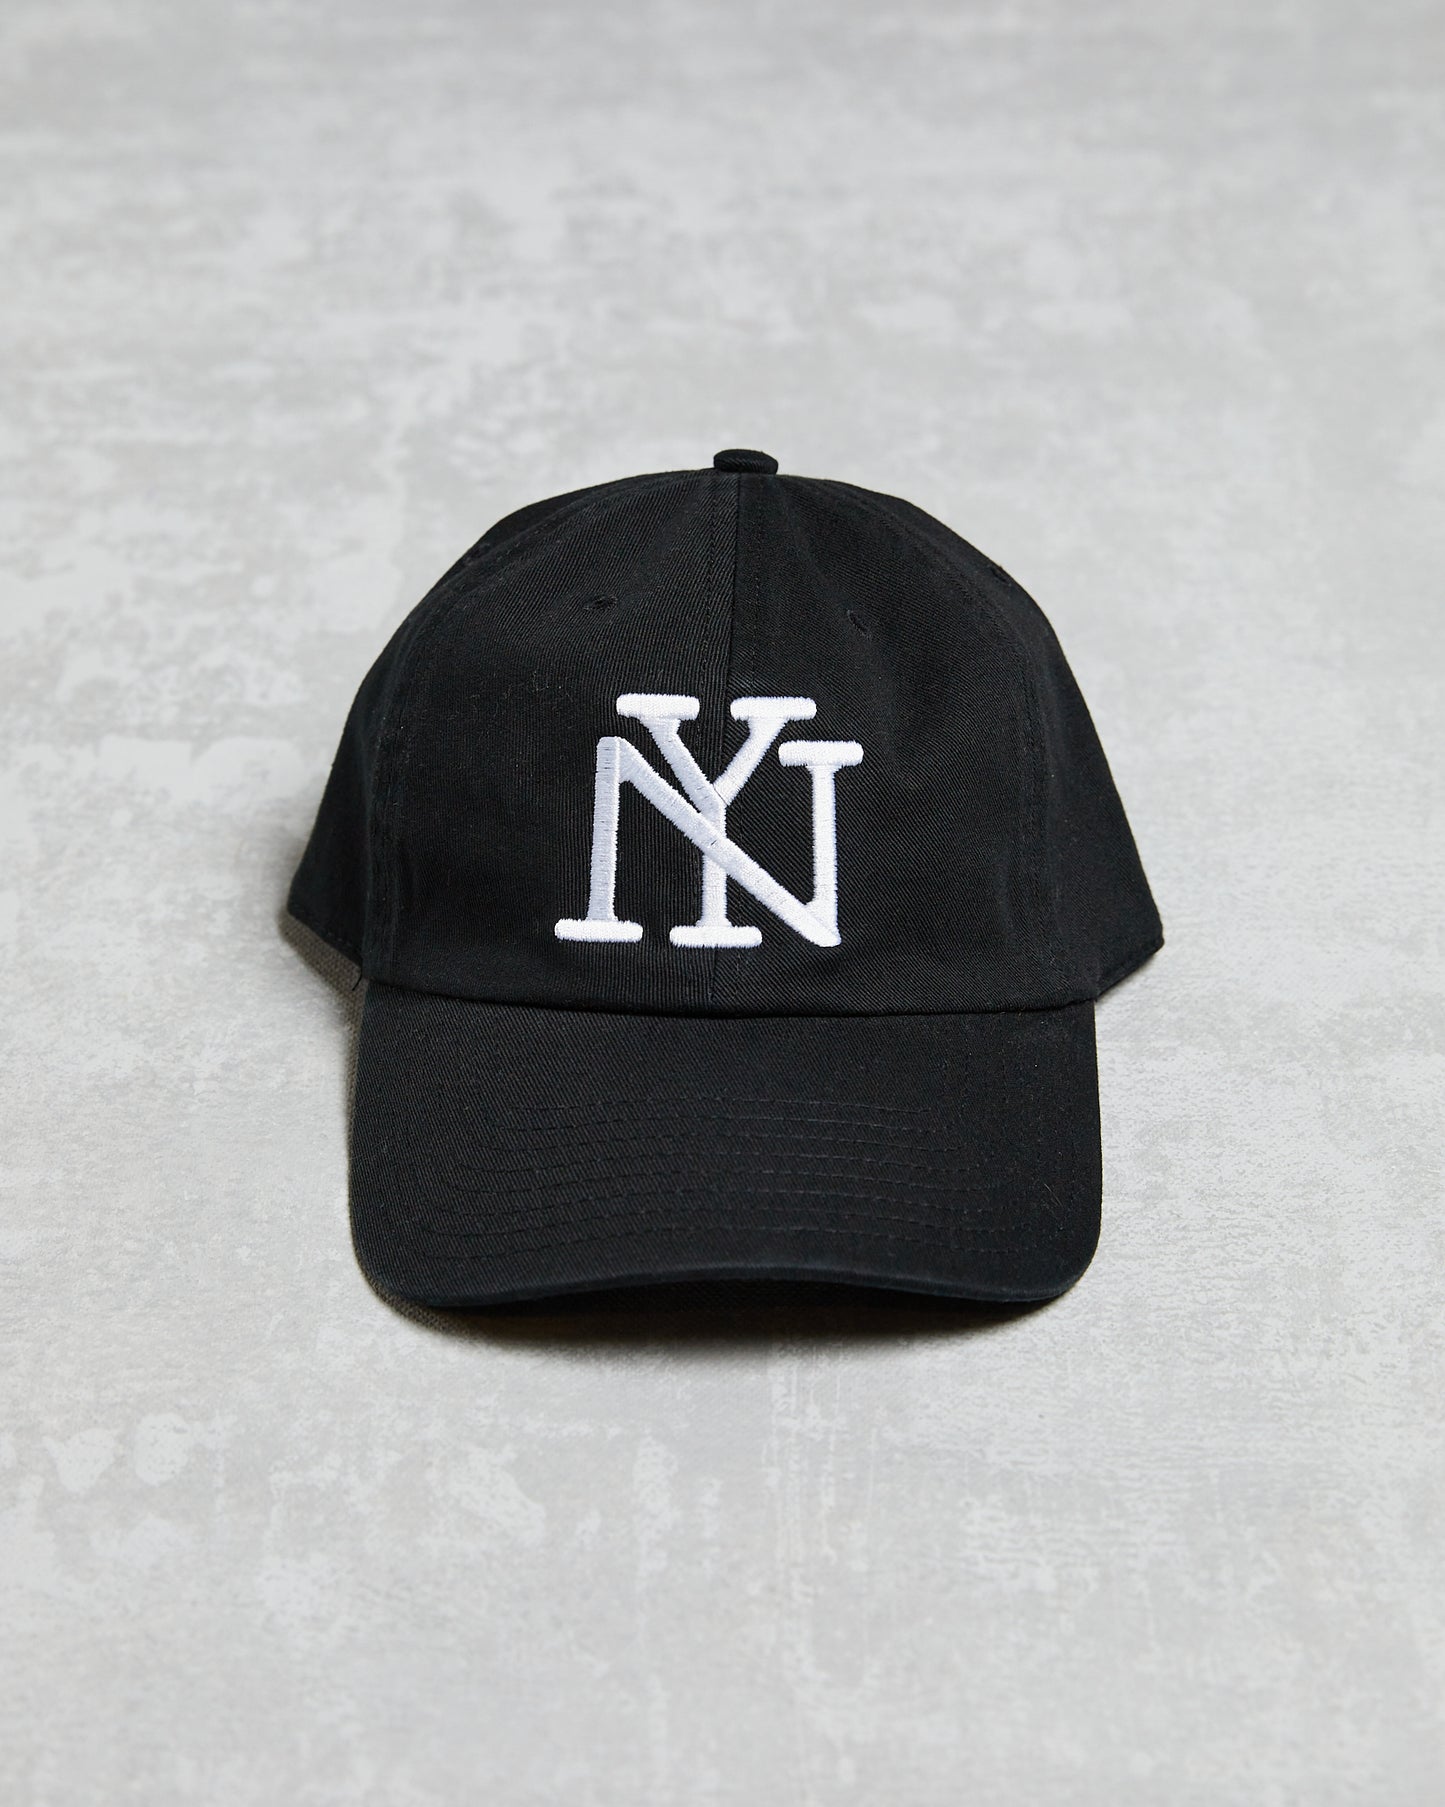 NEW YORK NUTJOB Core Hat black